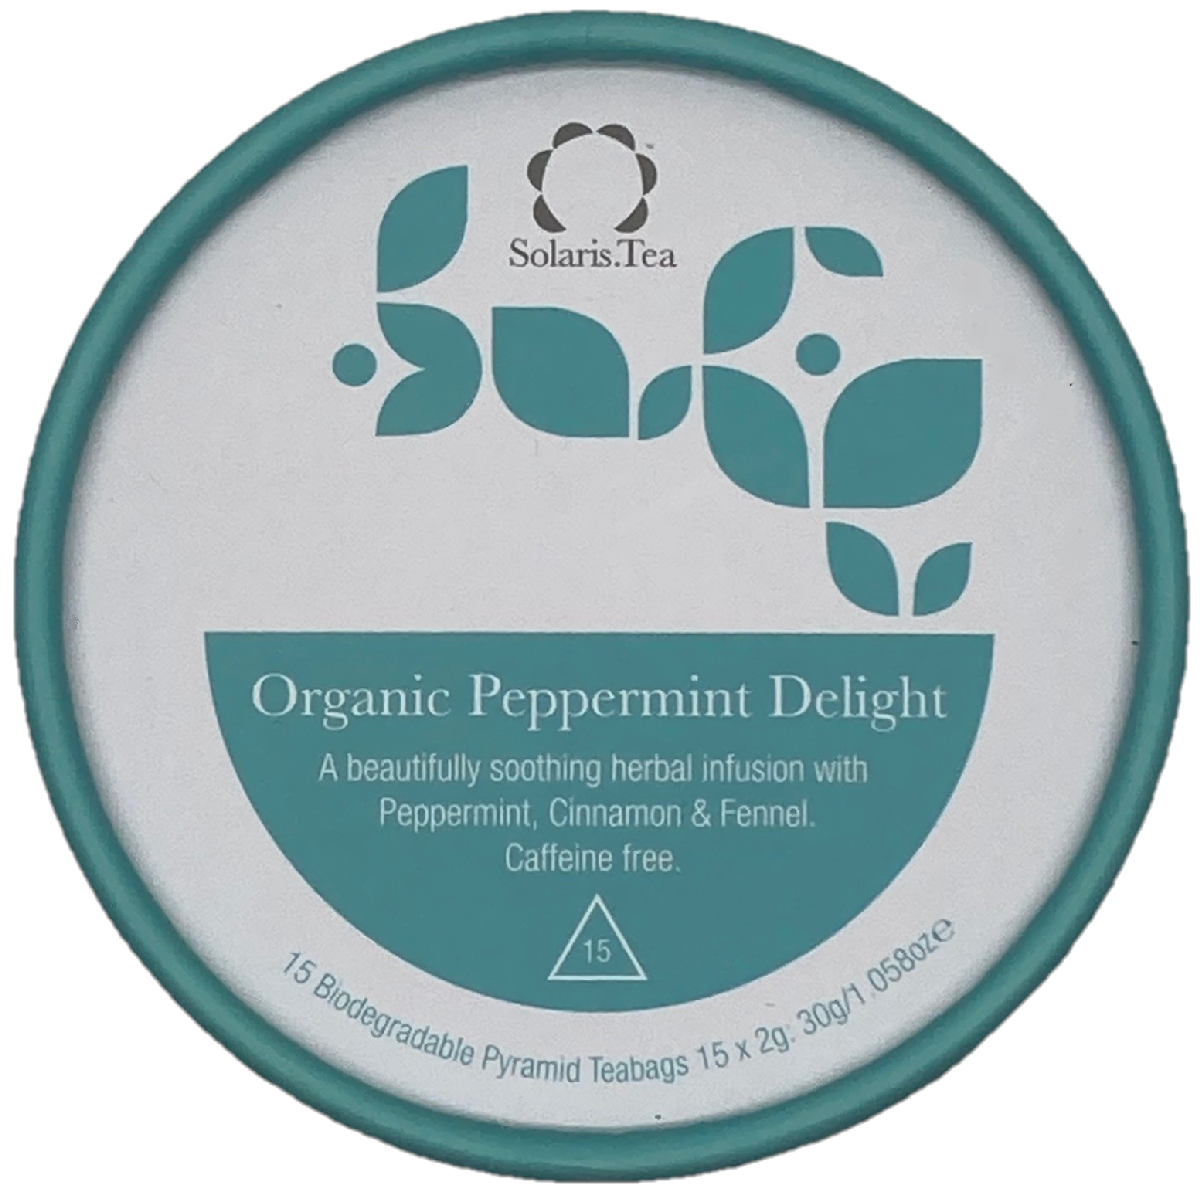 Solaris Tea Organic Peppermint Delight Pyramid Teabags 15x2g